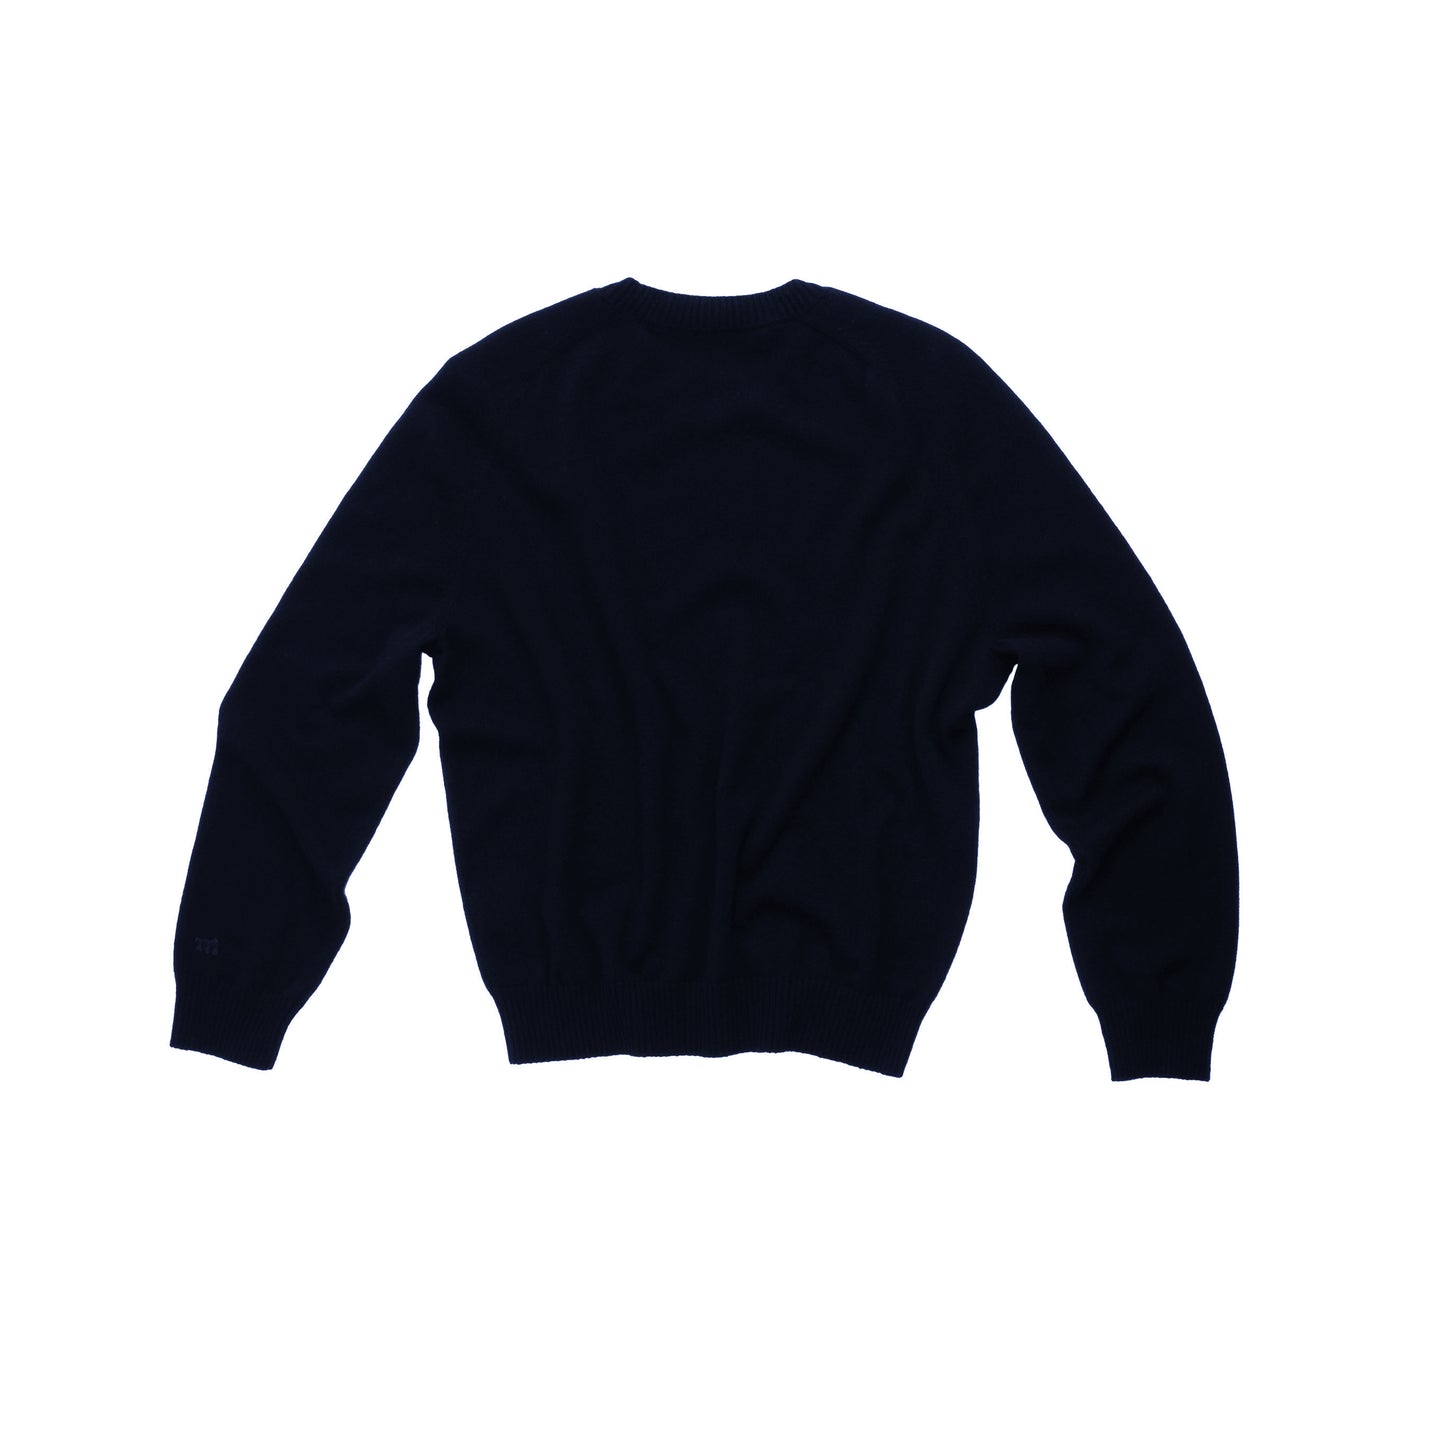 Jack Crew Neck Cashmere Sweater Midnight Blue